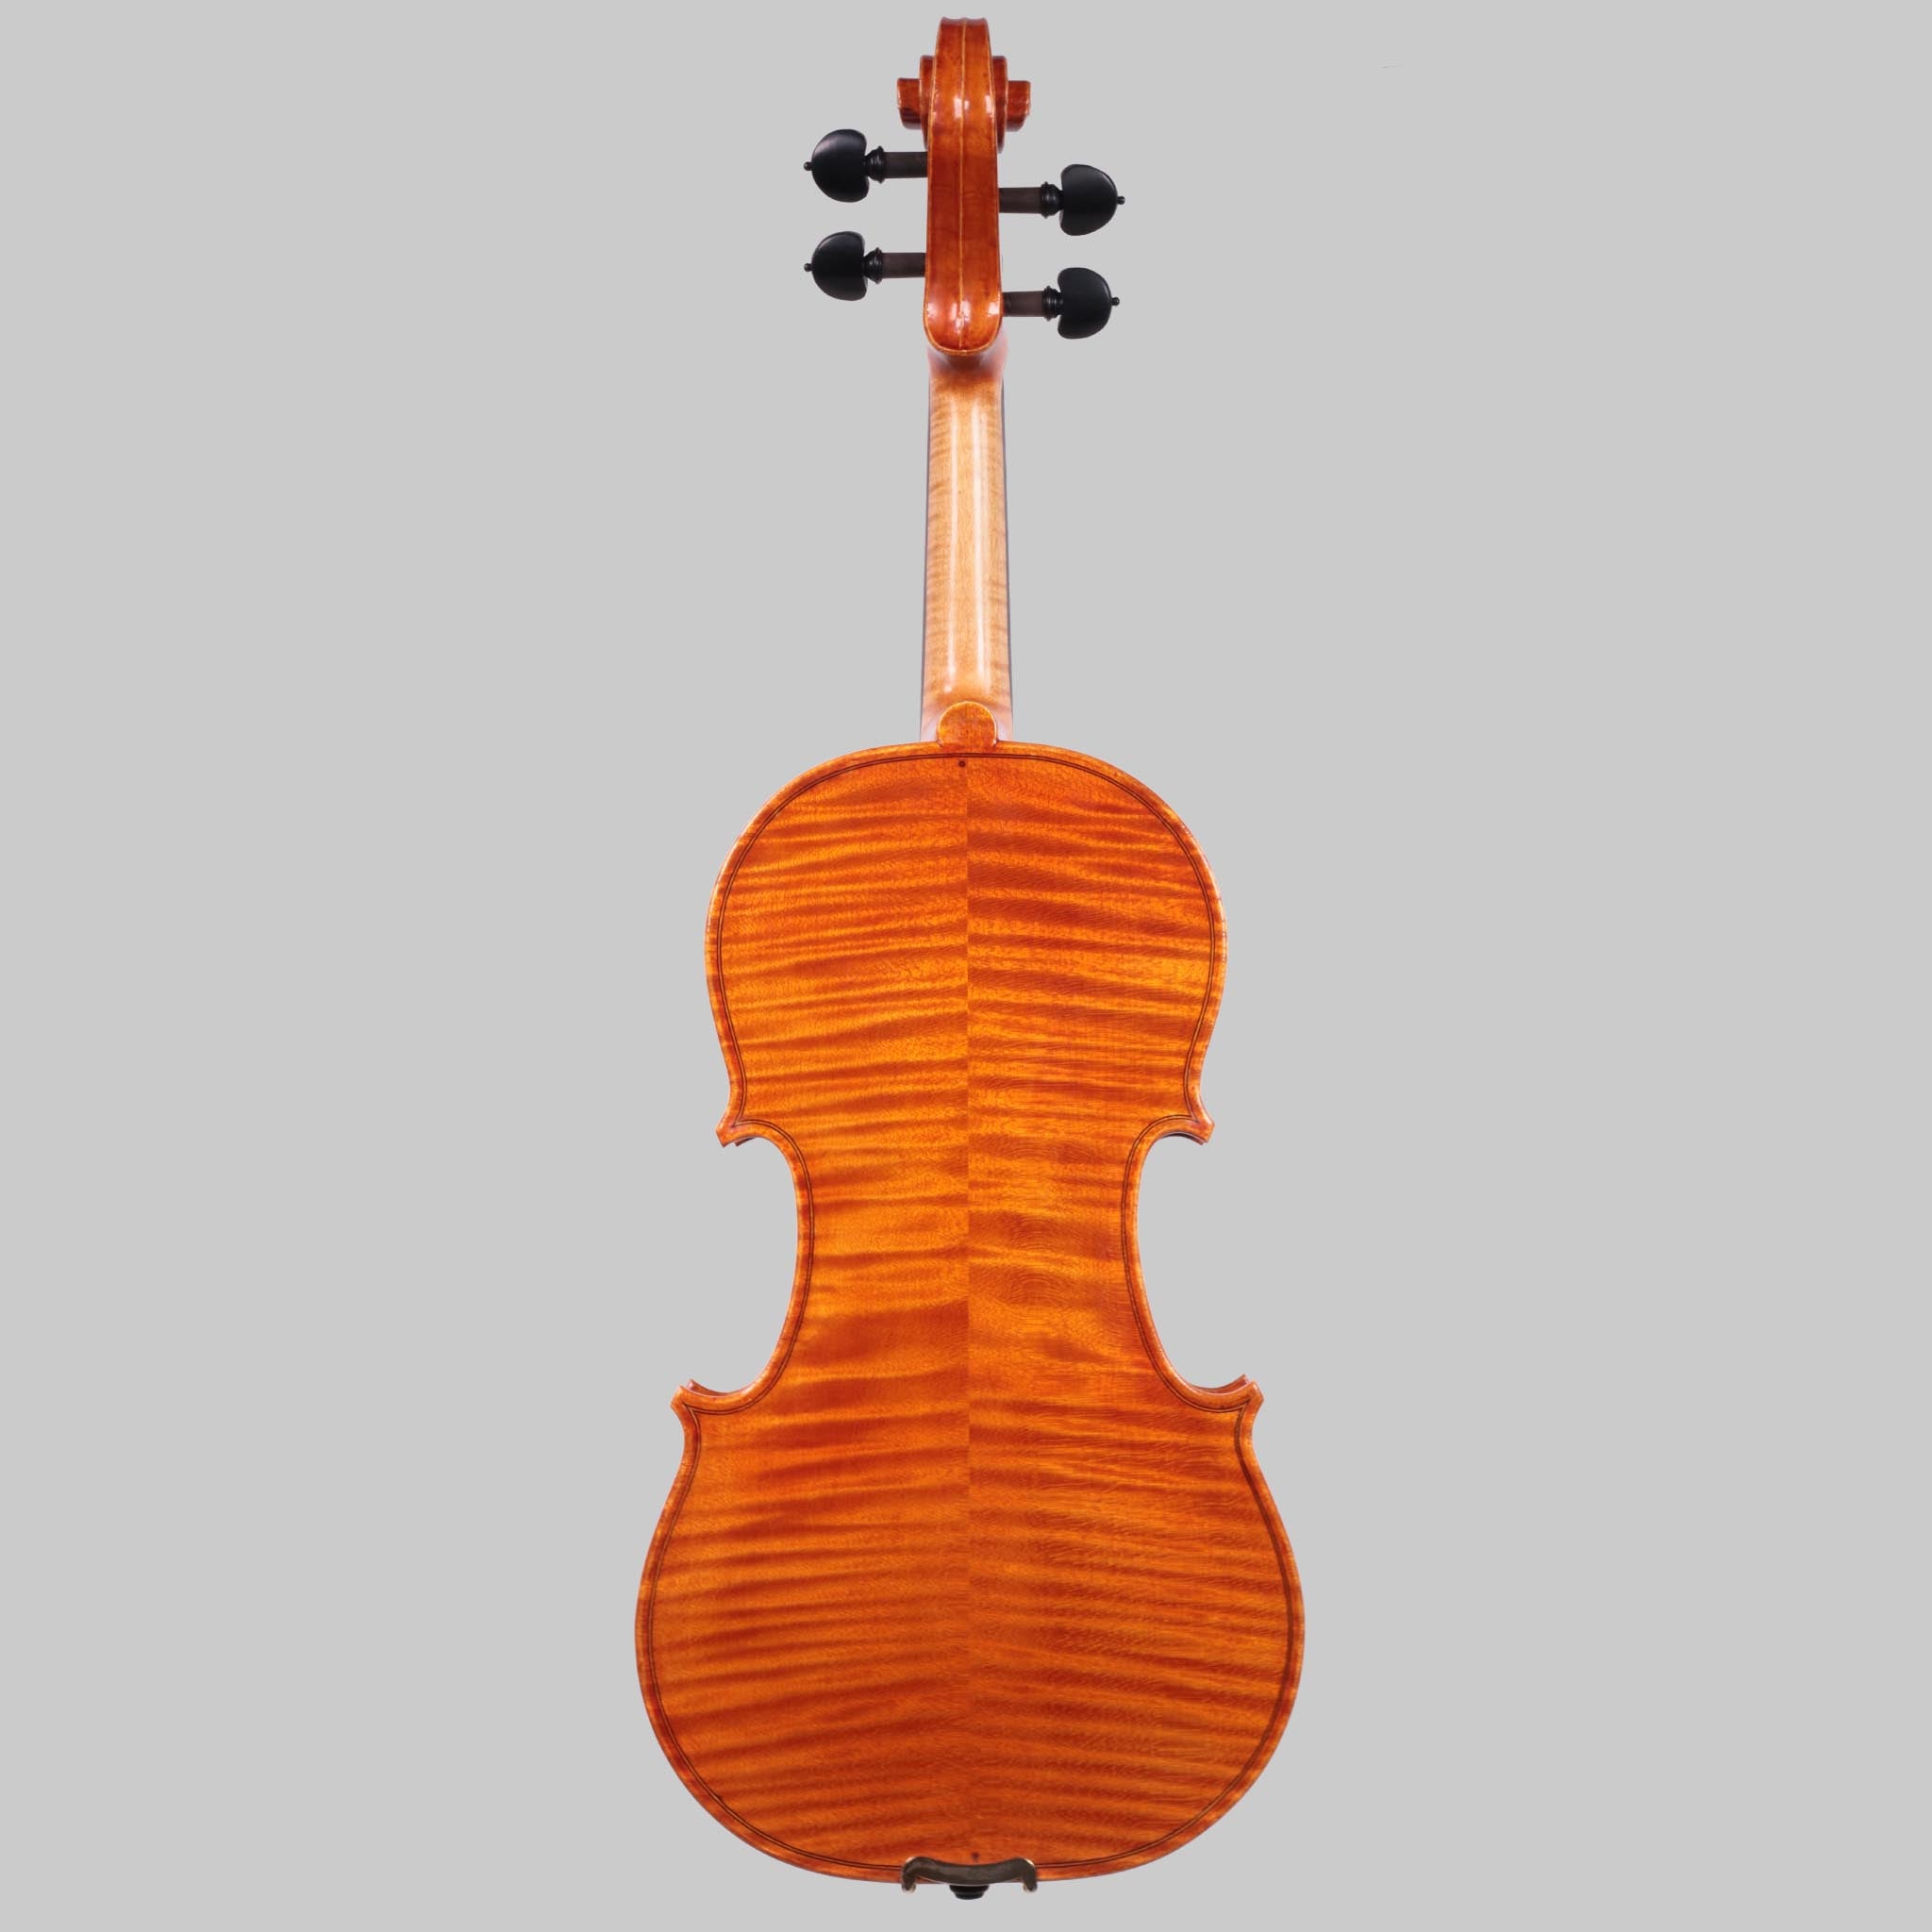 Craig Weinfuss Upton Massachusetts 2020 Violin